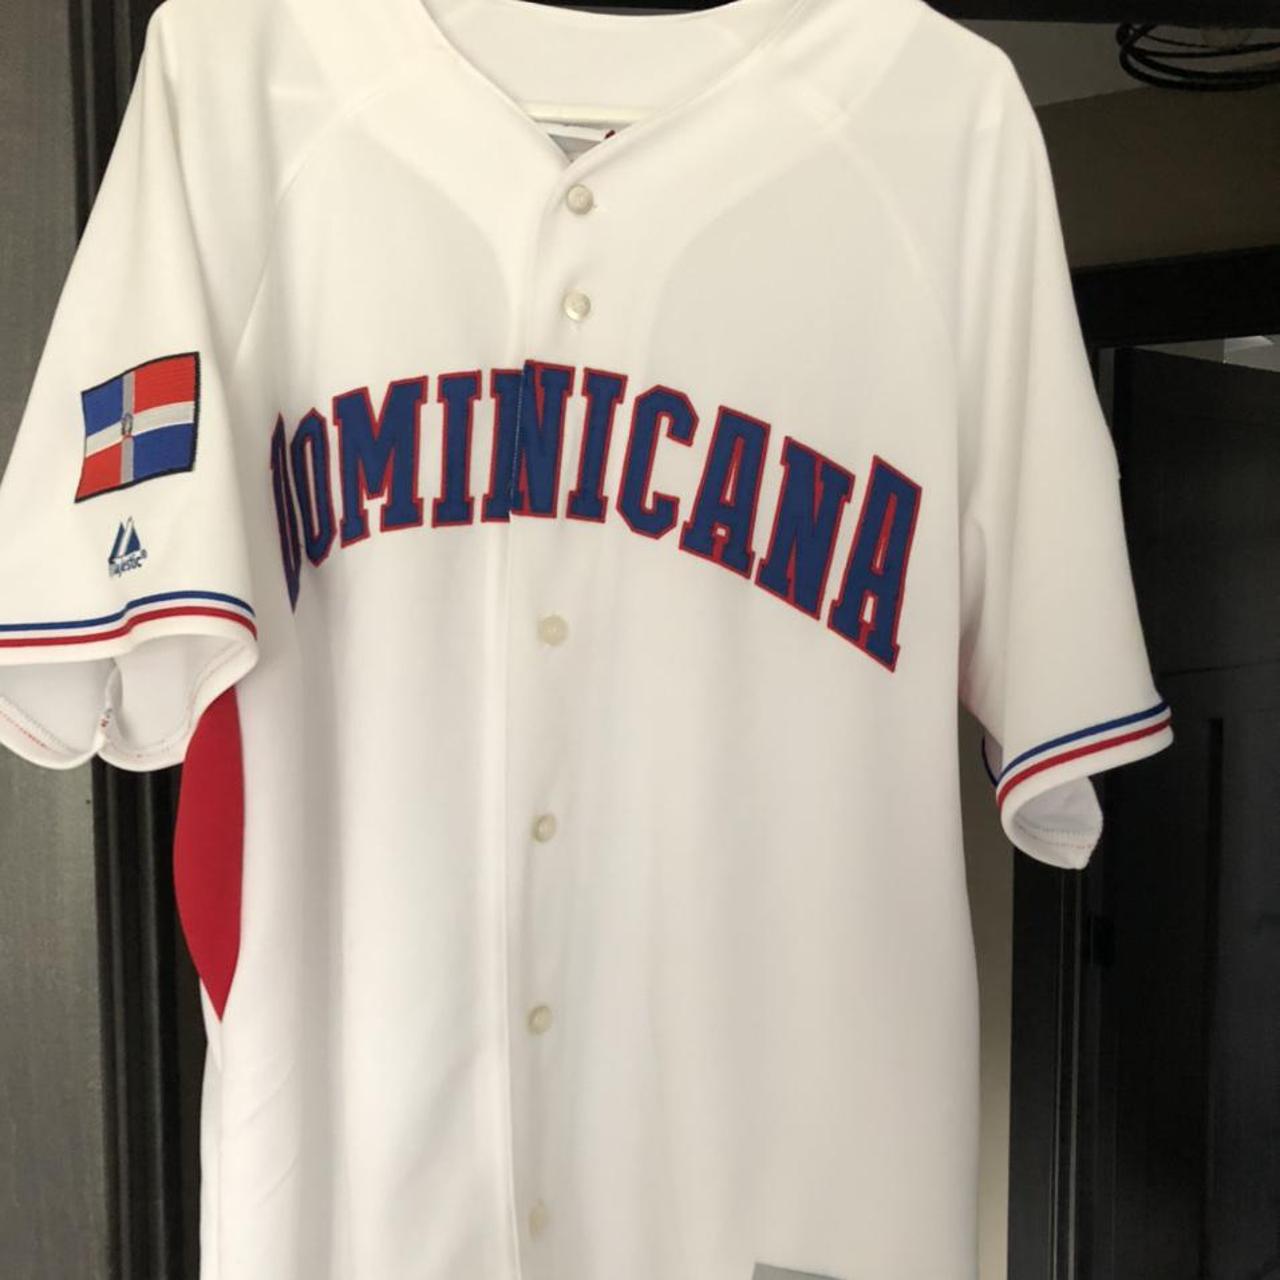 Dominican Republic Baseball Jersey - Depop